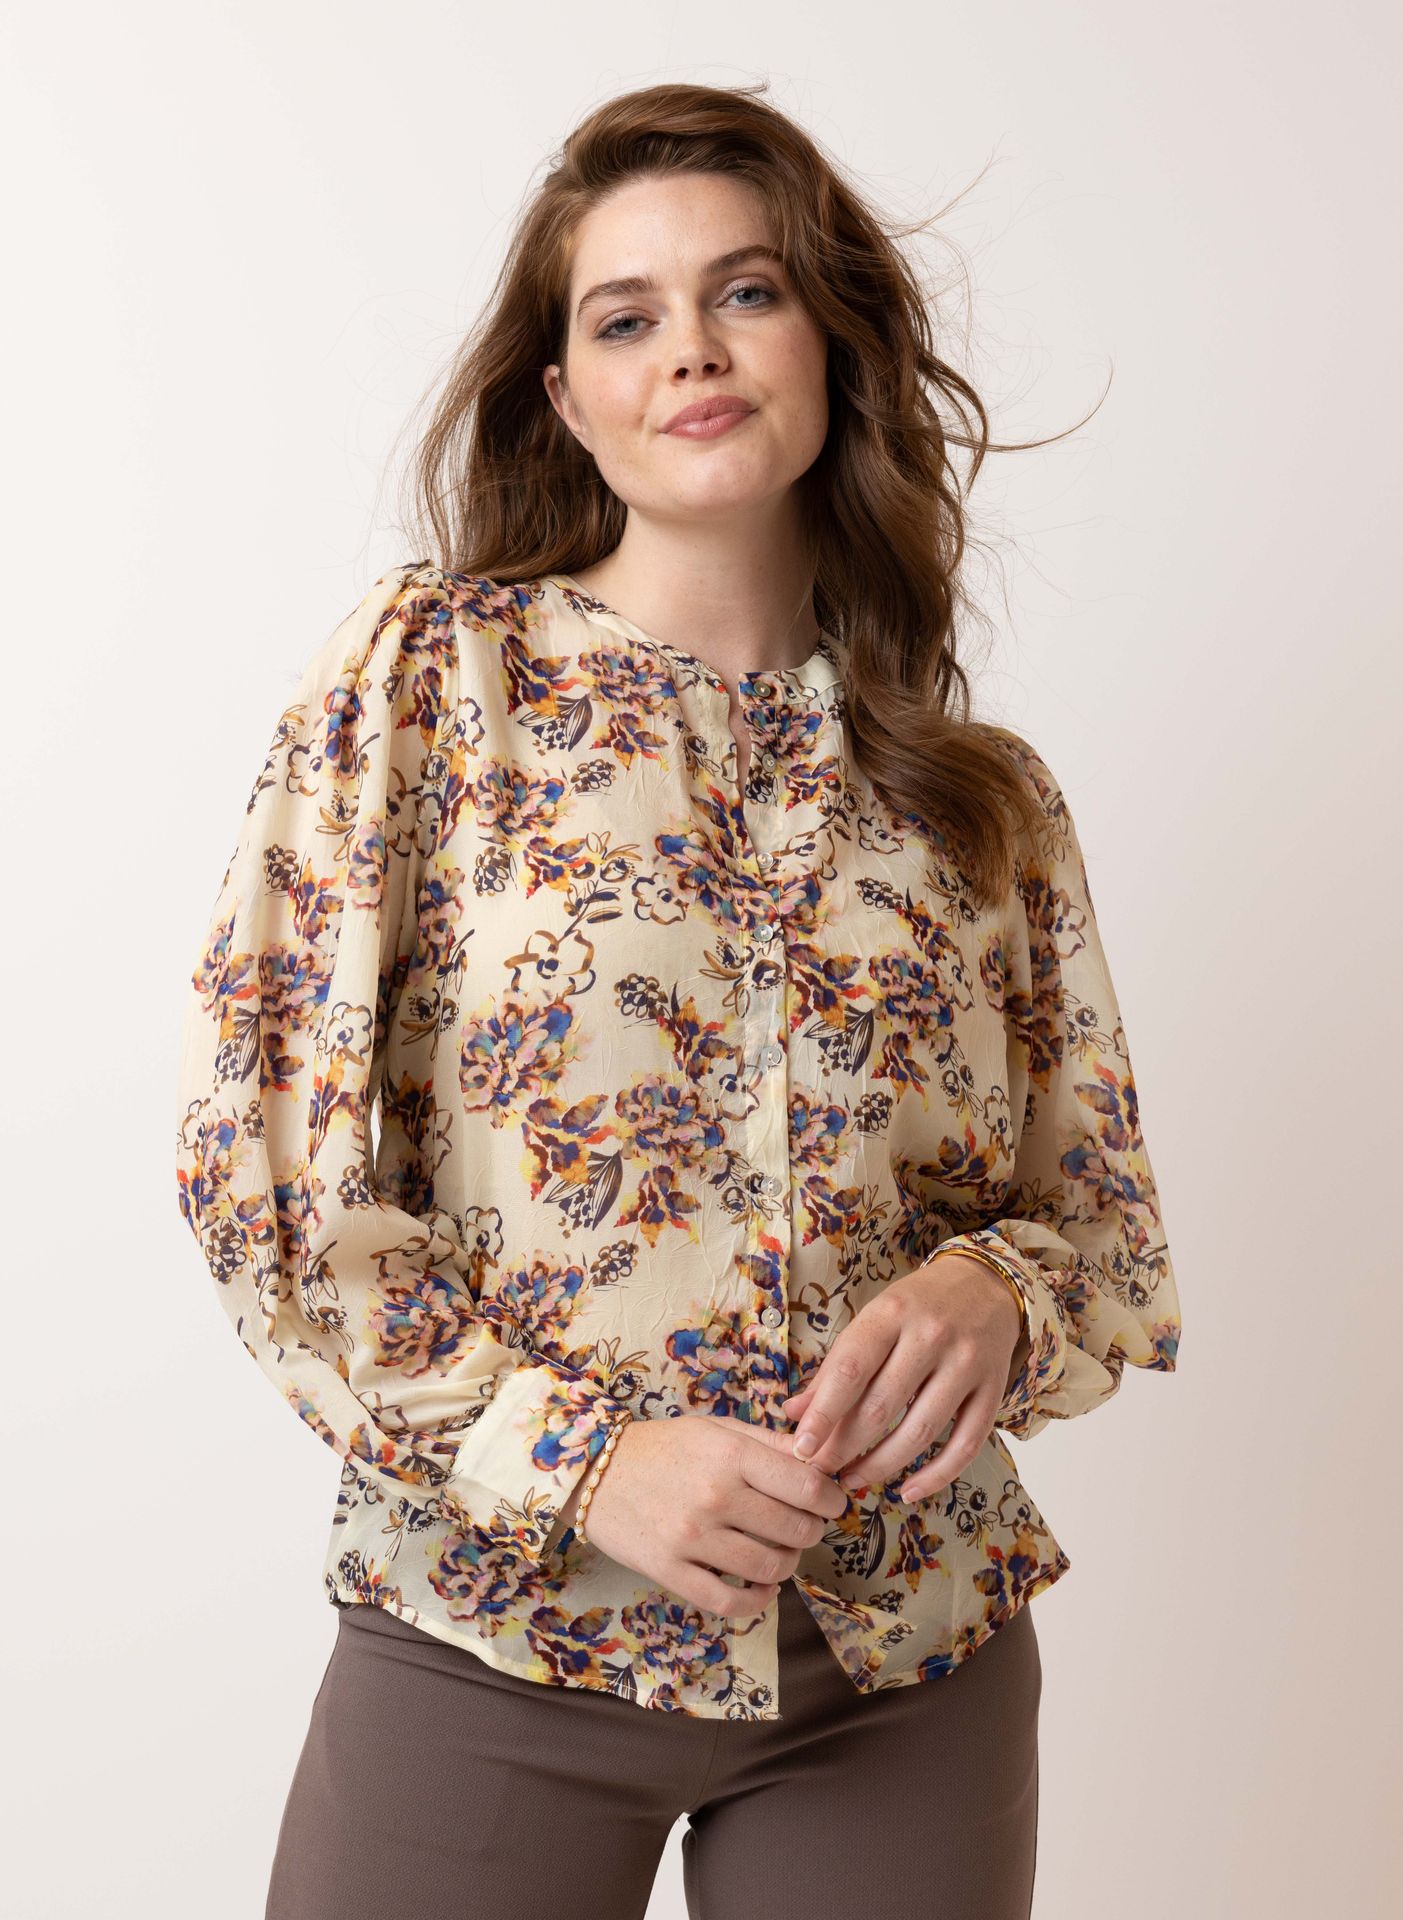  Meerkleurige blouse vanilla multicolor 214857-108-34